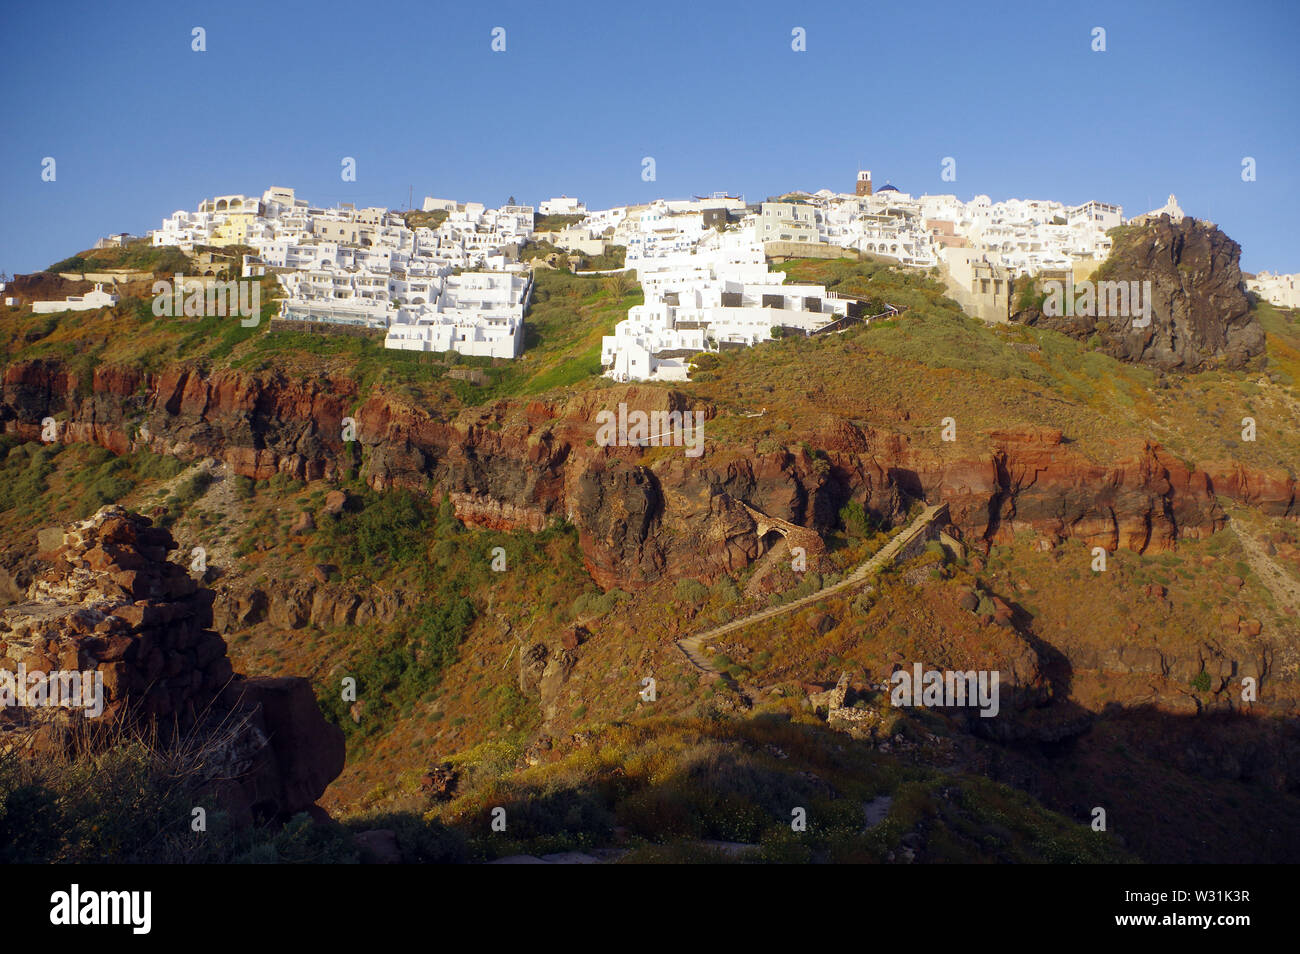 Village of Imerovigli on the Island of Santorini, Greece Stock Photo